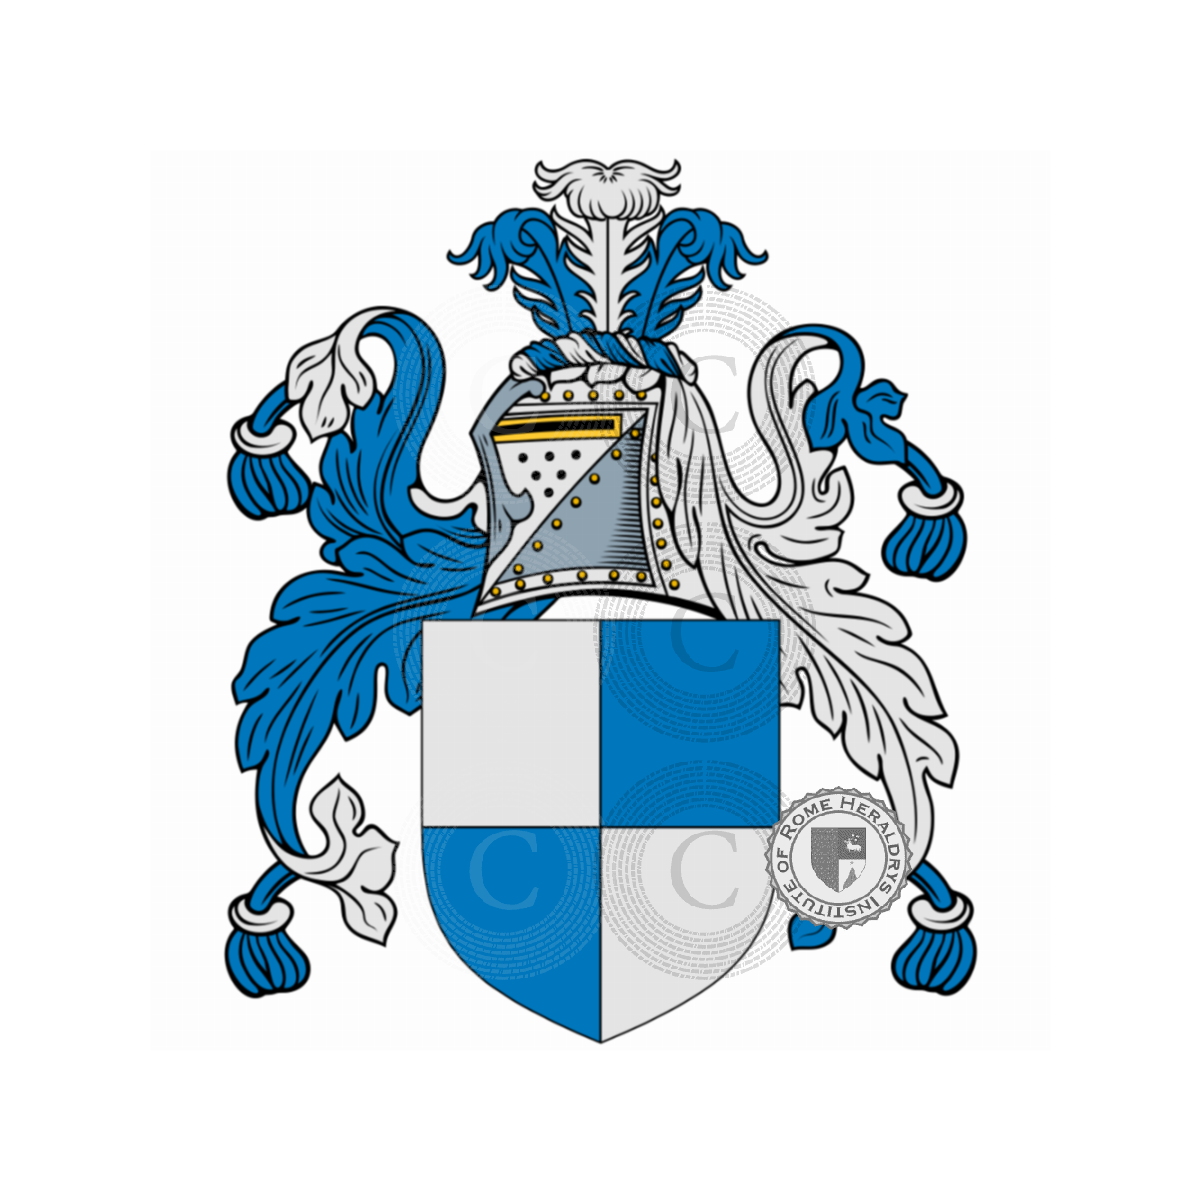 Coat of arms of familyBray, Bree